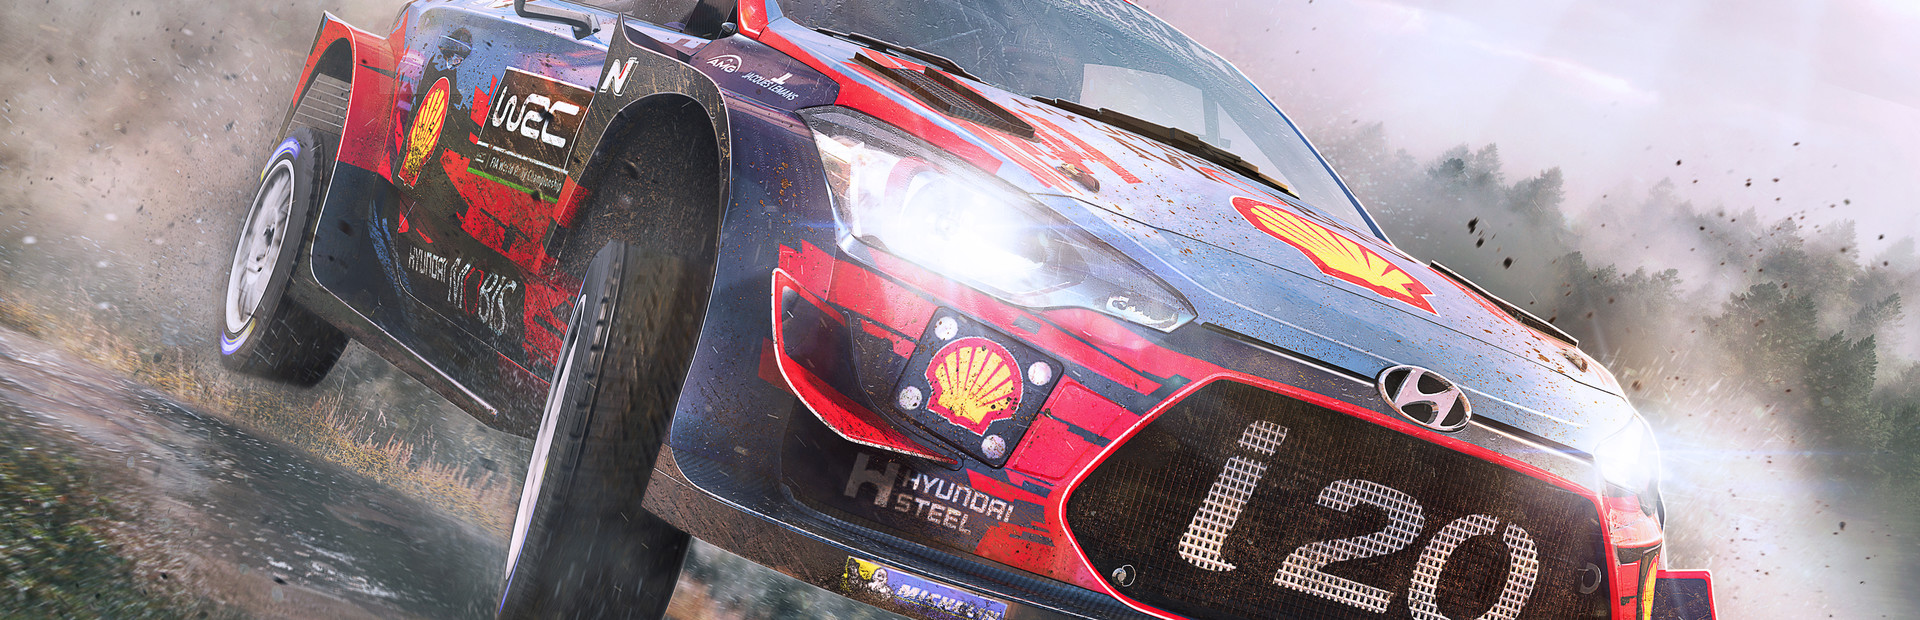 WRC 8 FIA World Rally Championship cover image